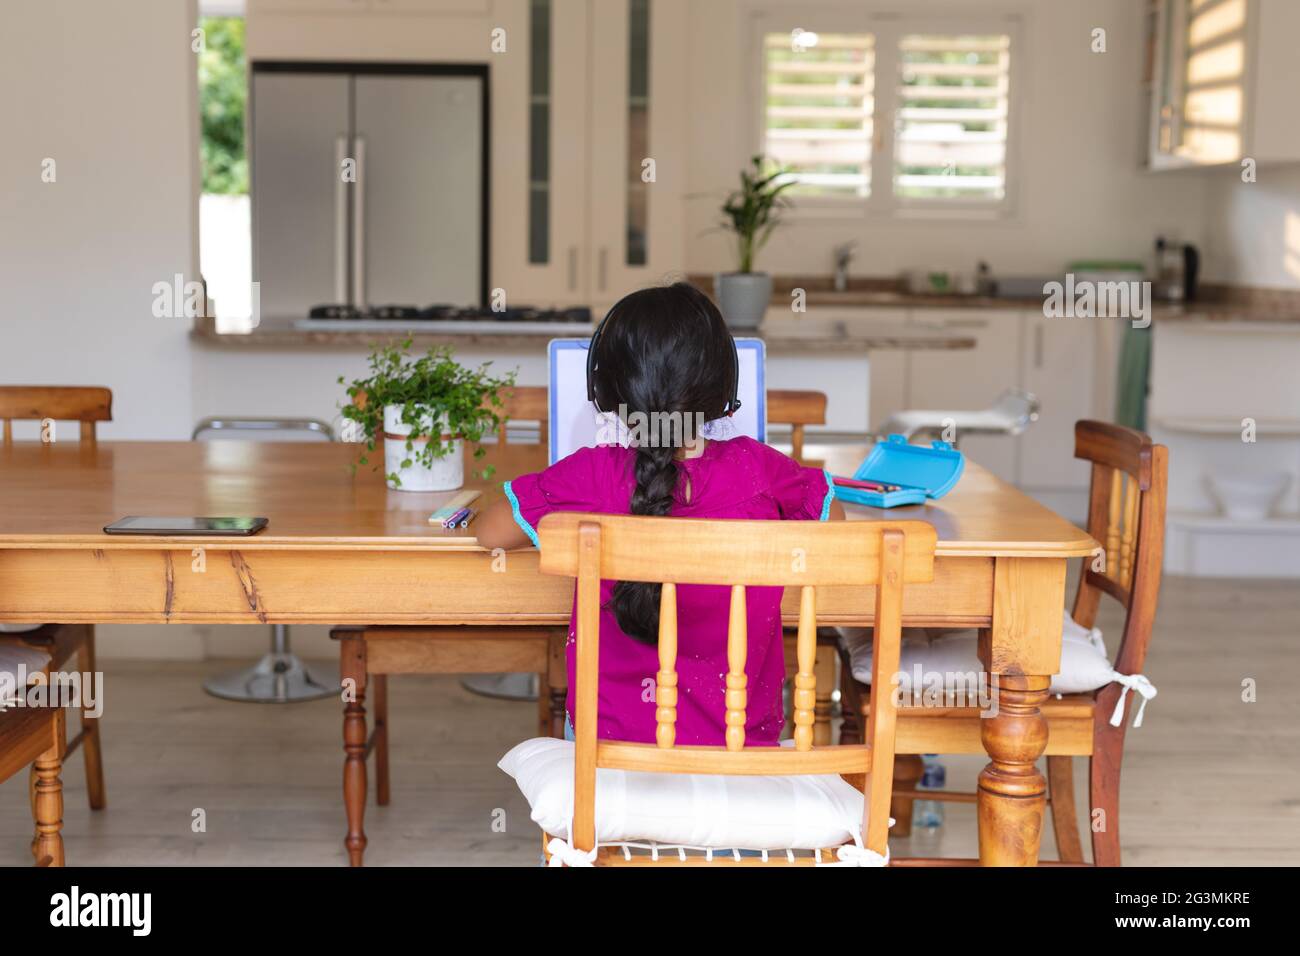 Hispanic girl sitting at kitchen table doing school work using laptop Stock Photo